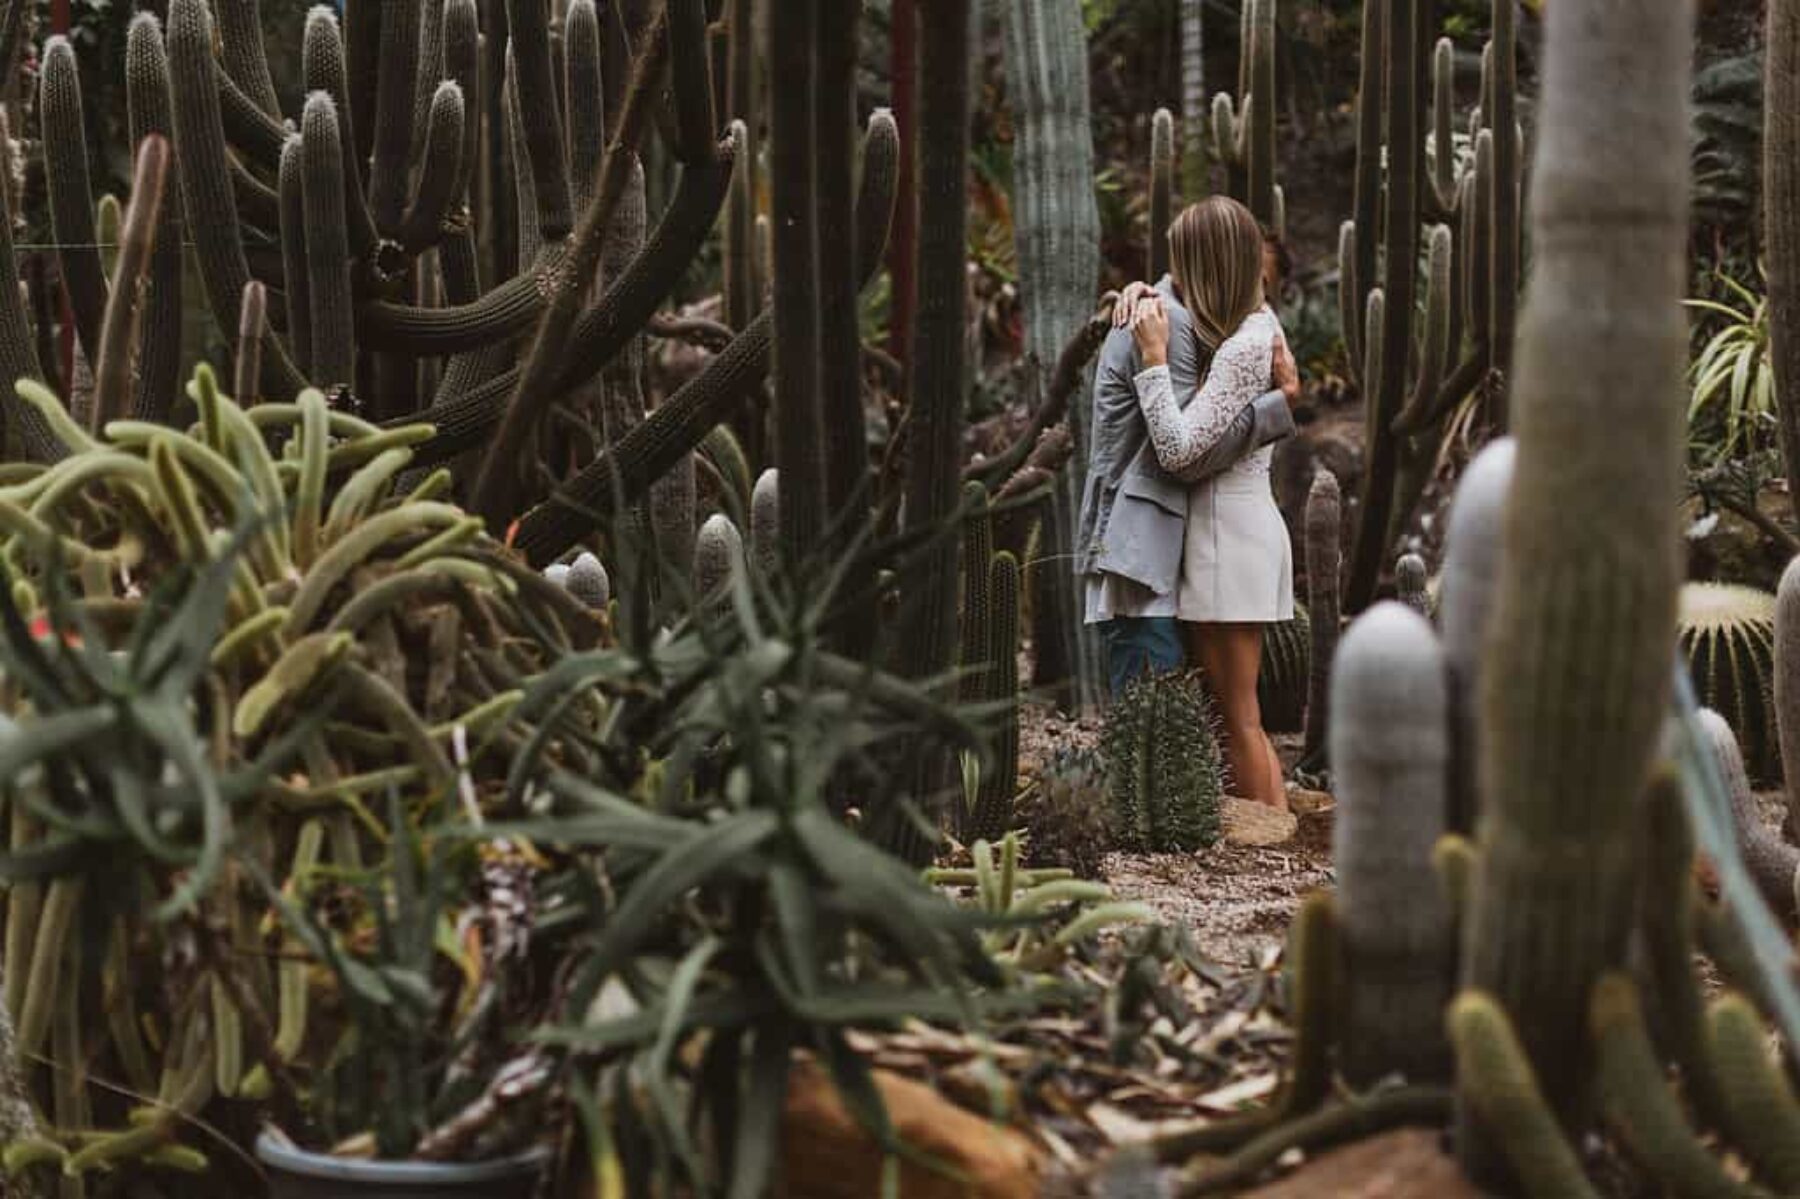 Cactus farm engagement shoot / photography by Janneke Storm